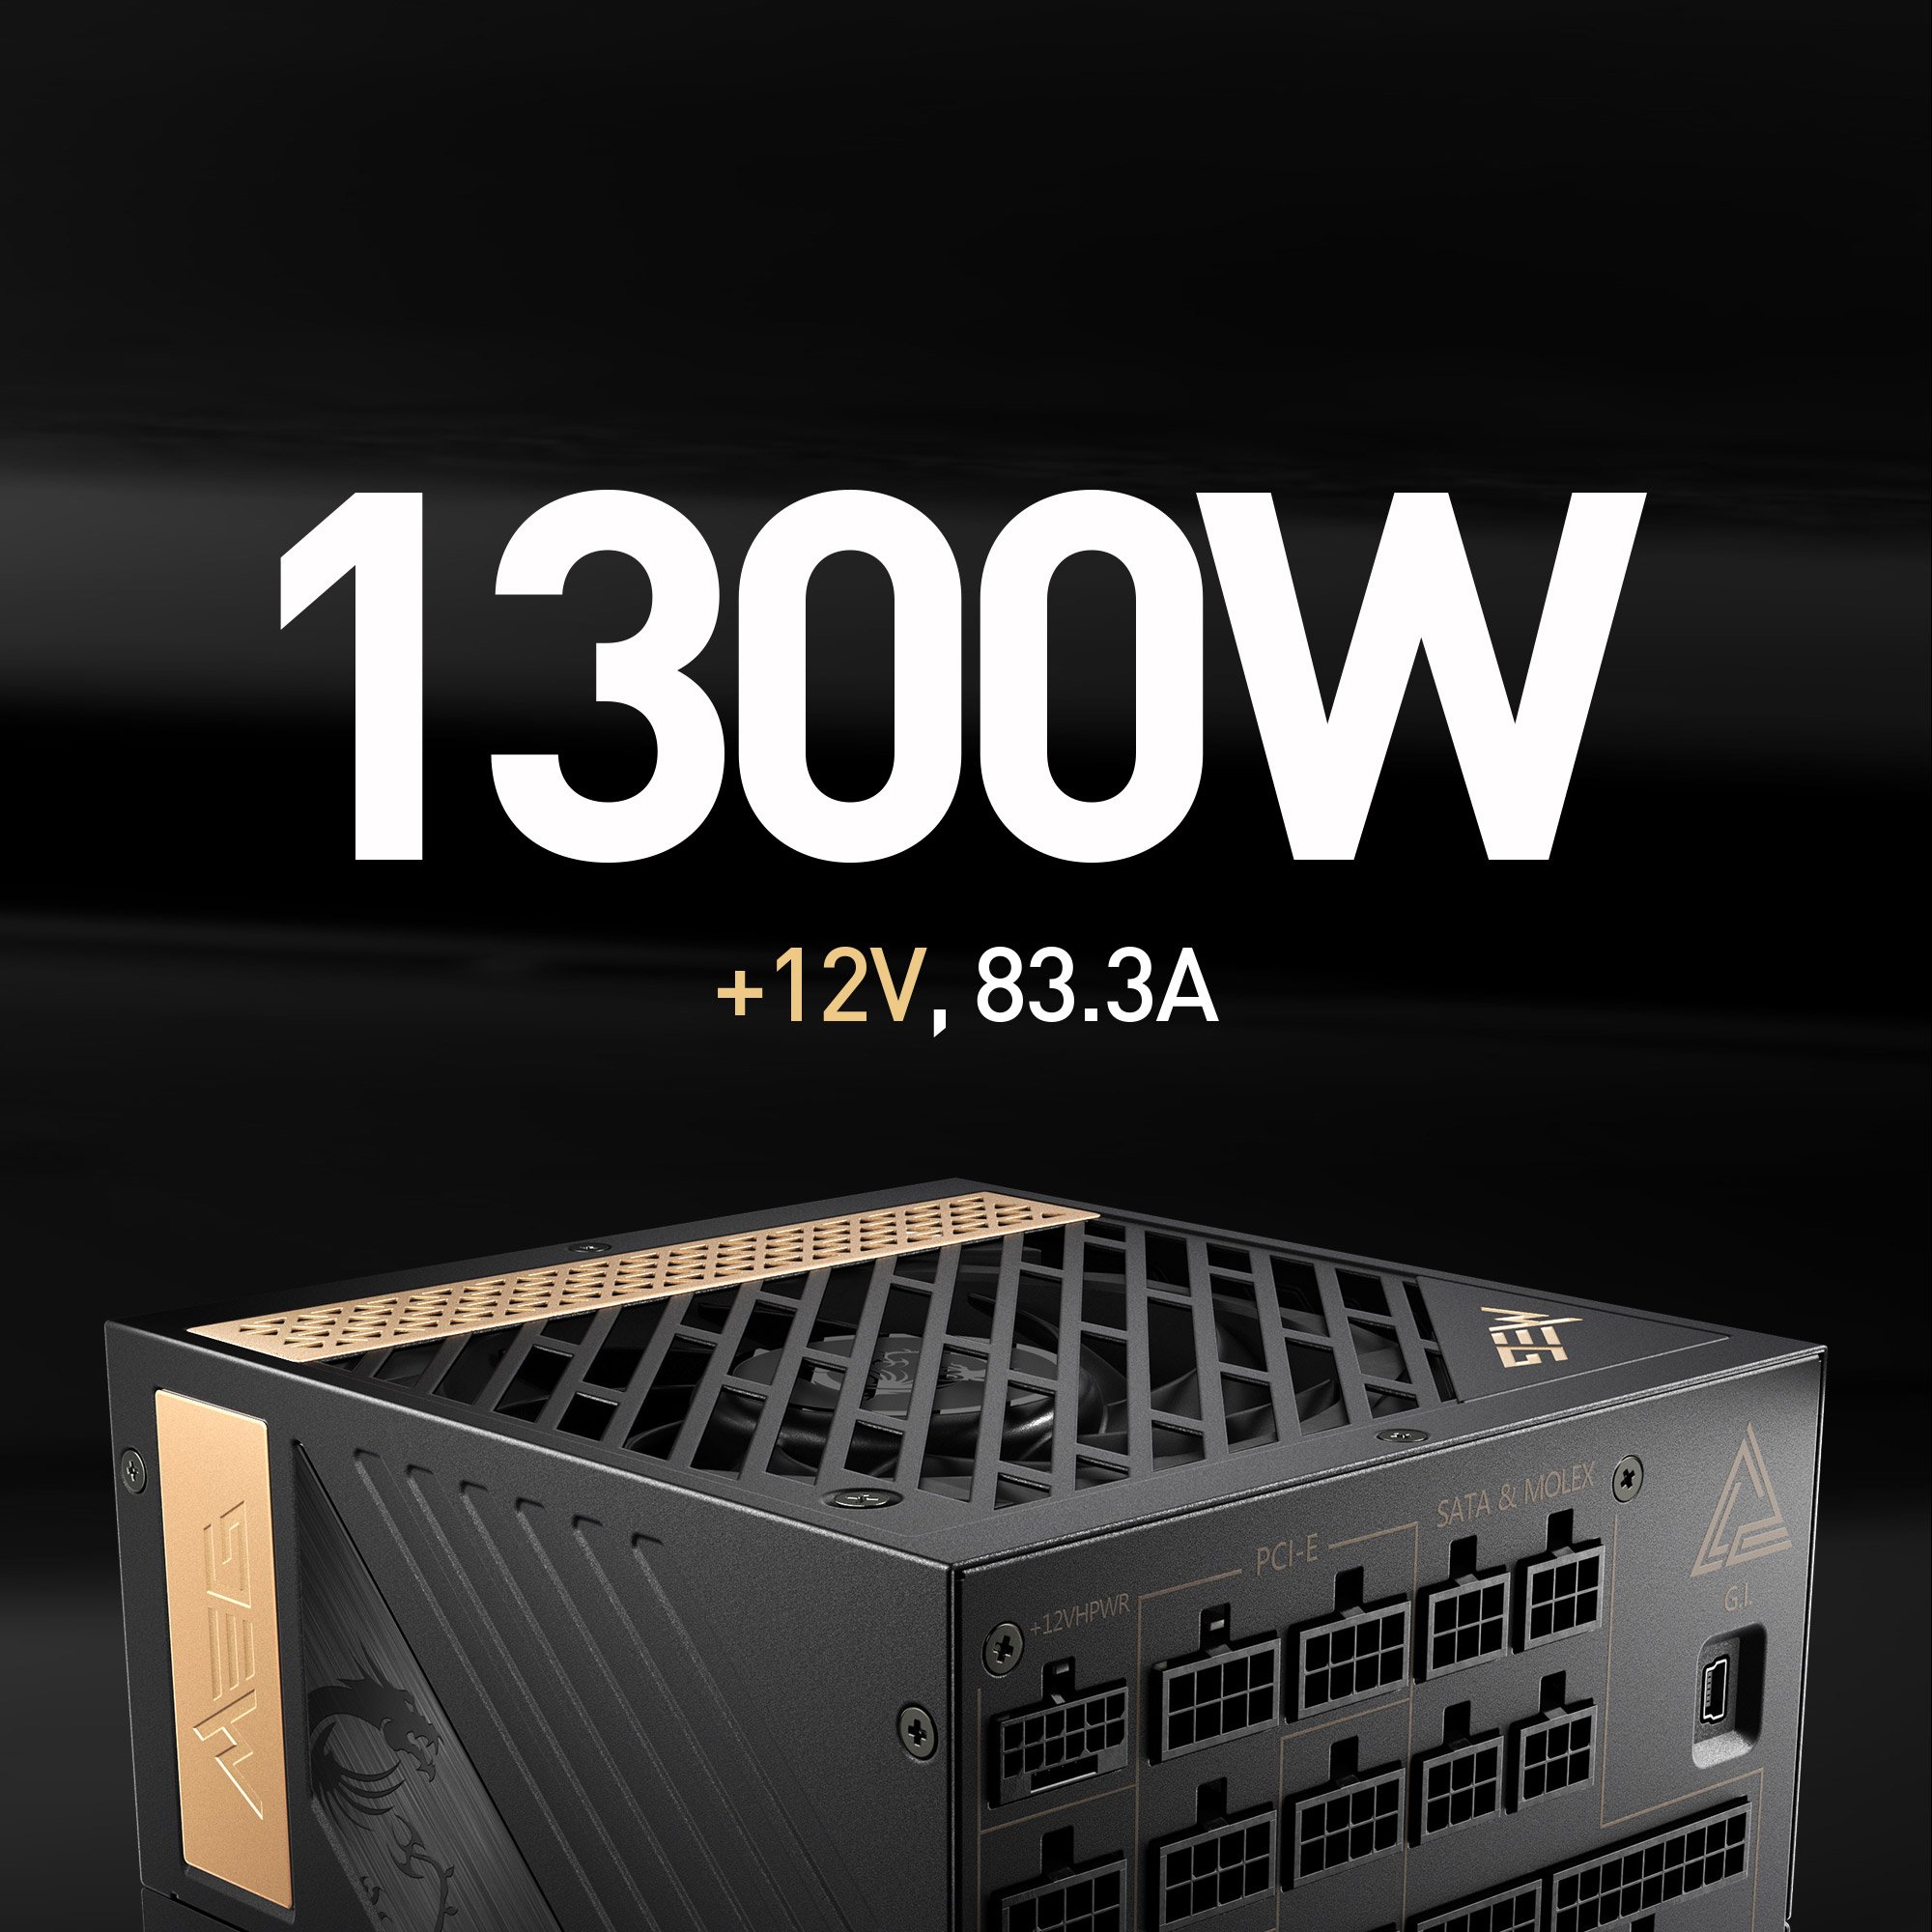 The MEG Ai1300P PCIE5 power supply